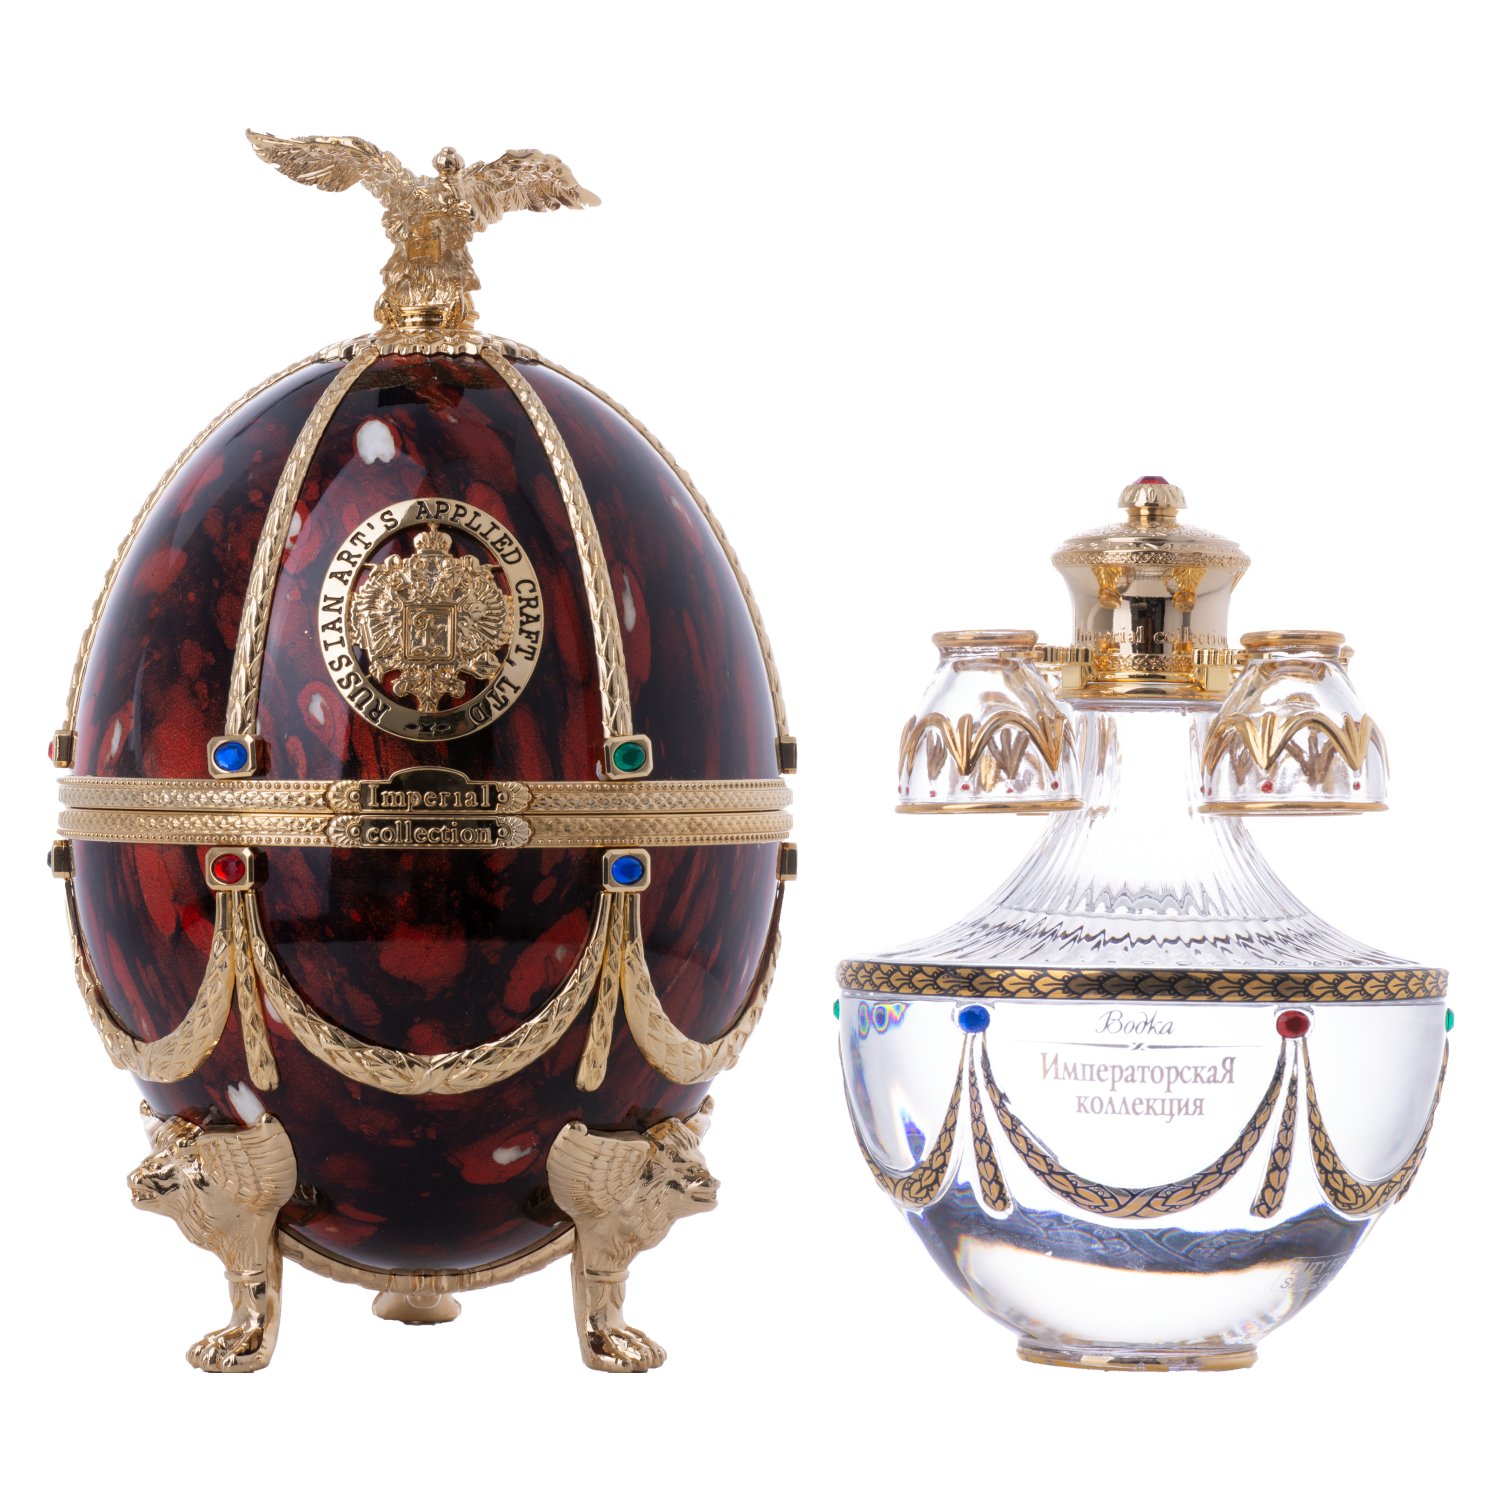 Caskaja Imperial Carskaja Imperial Collection Faberge rubínová 40% 0,7L